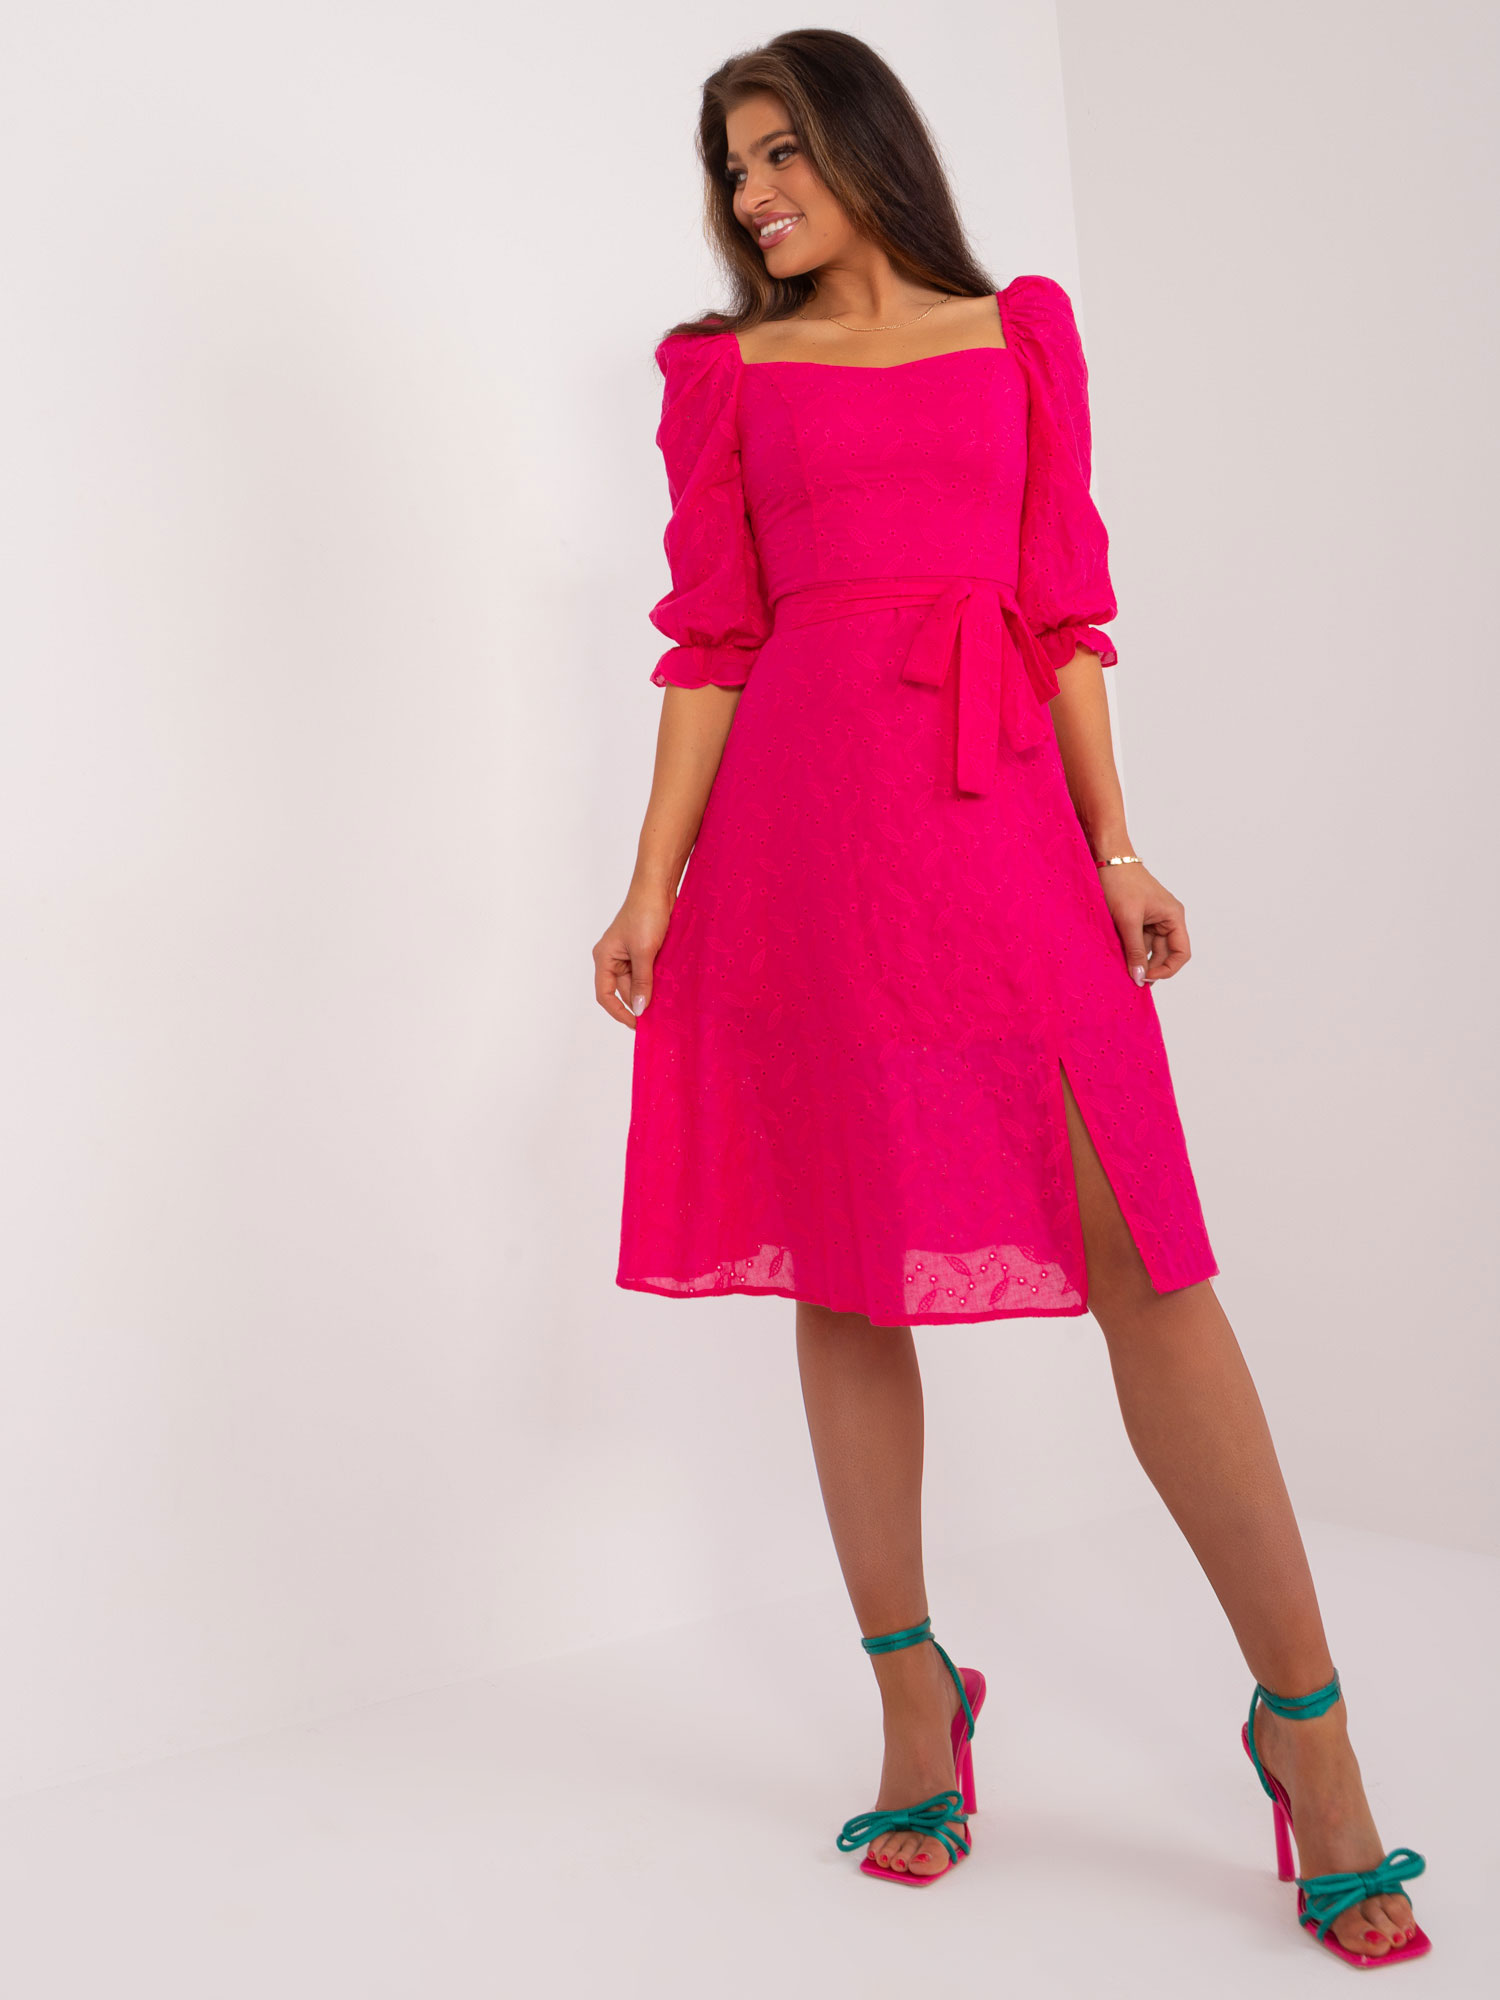 Fuchsia midi dress with embroidery